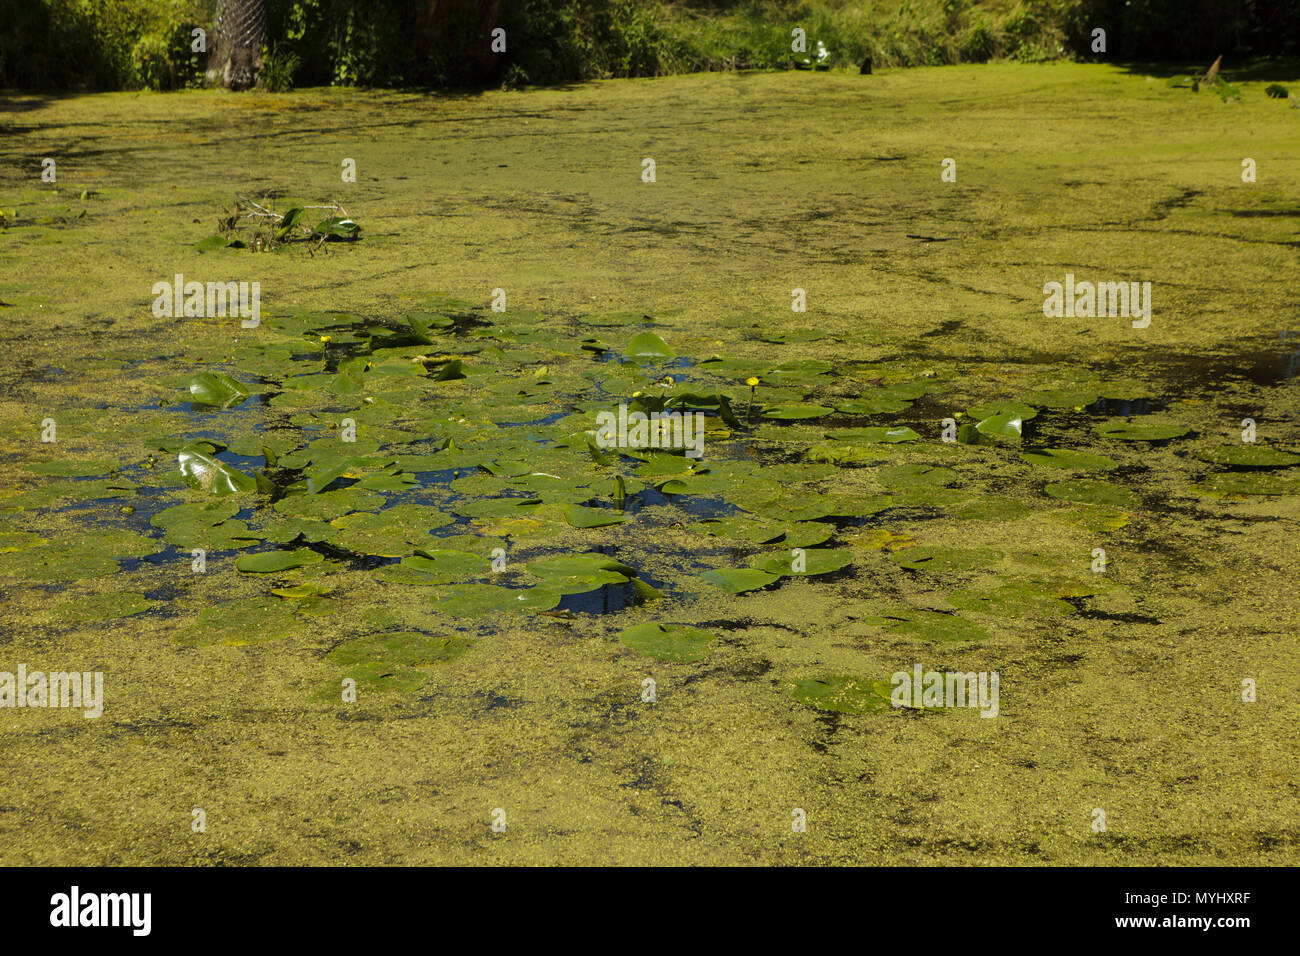 duckweed on wetland's pond in stron summer light Stock Photo